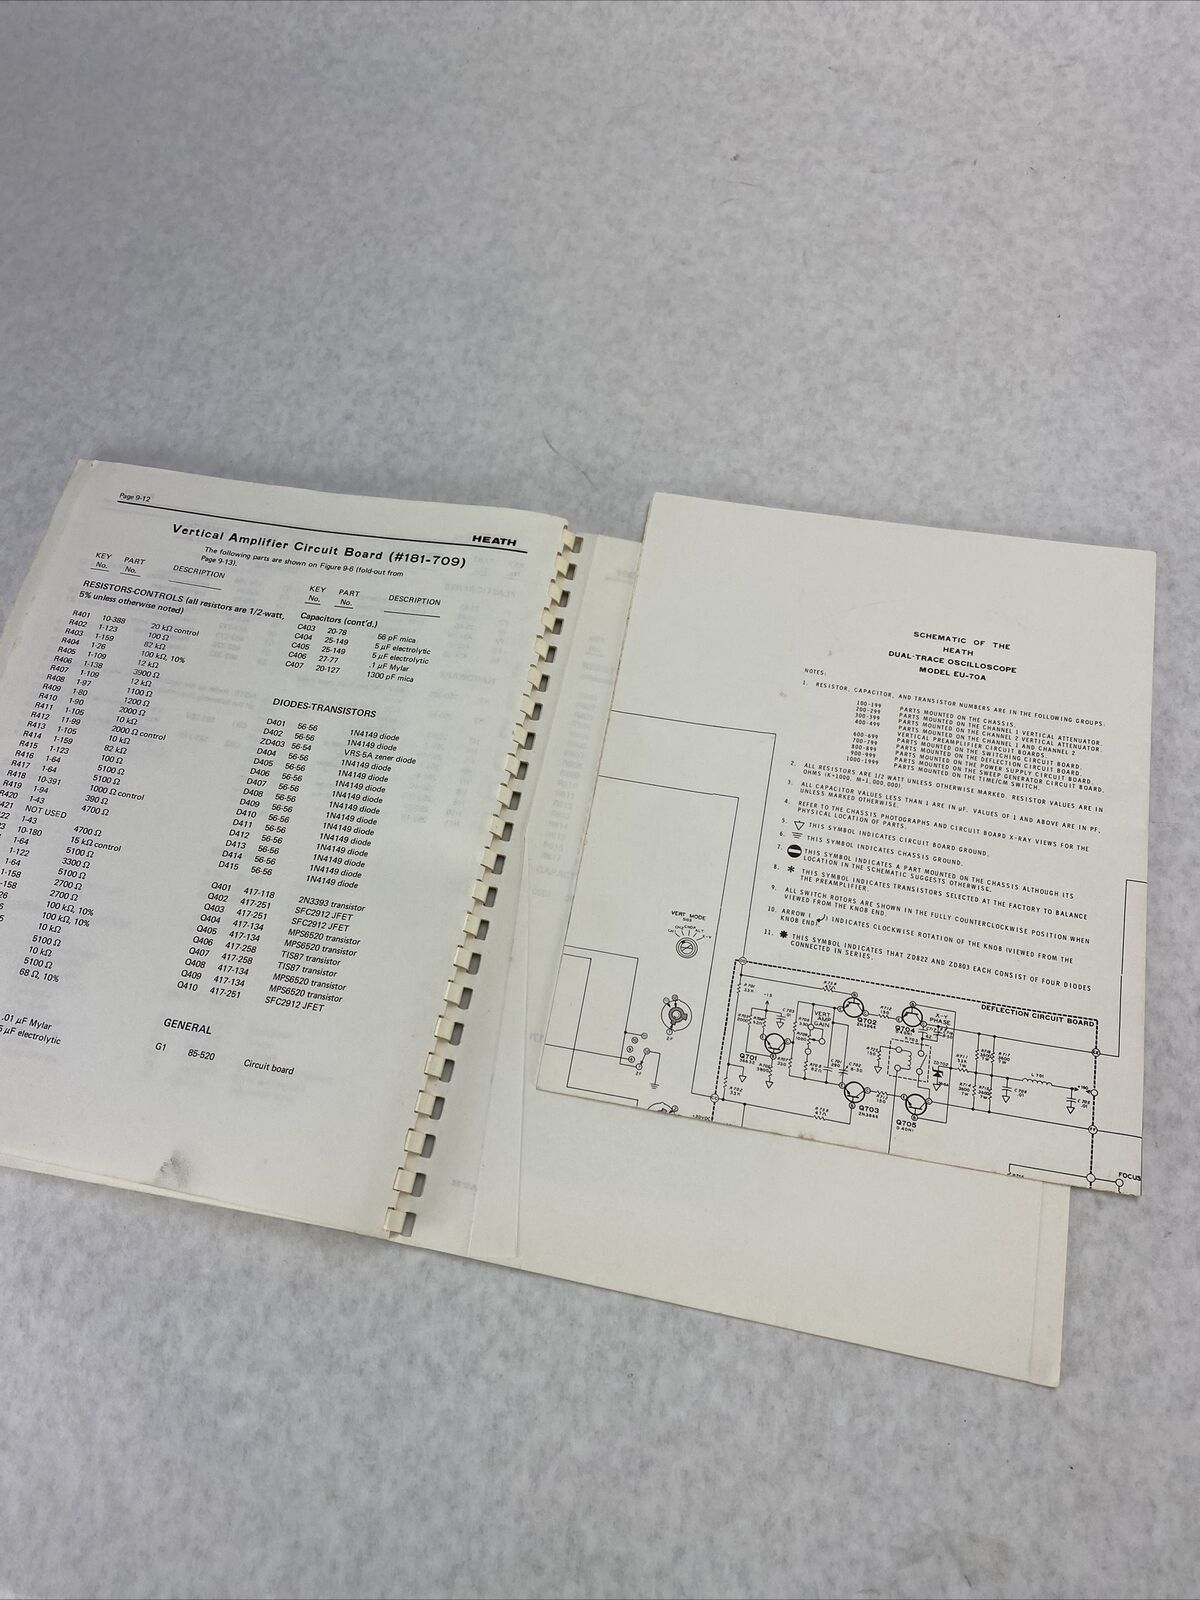 The Heath Original Manual Dual Trace Oscilloscope Model EU-70A 1970 595-1274-01